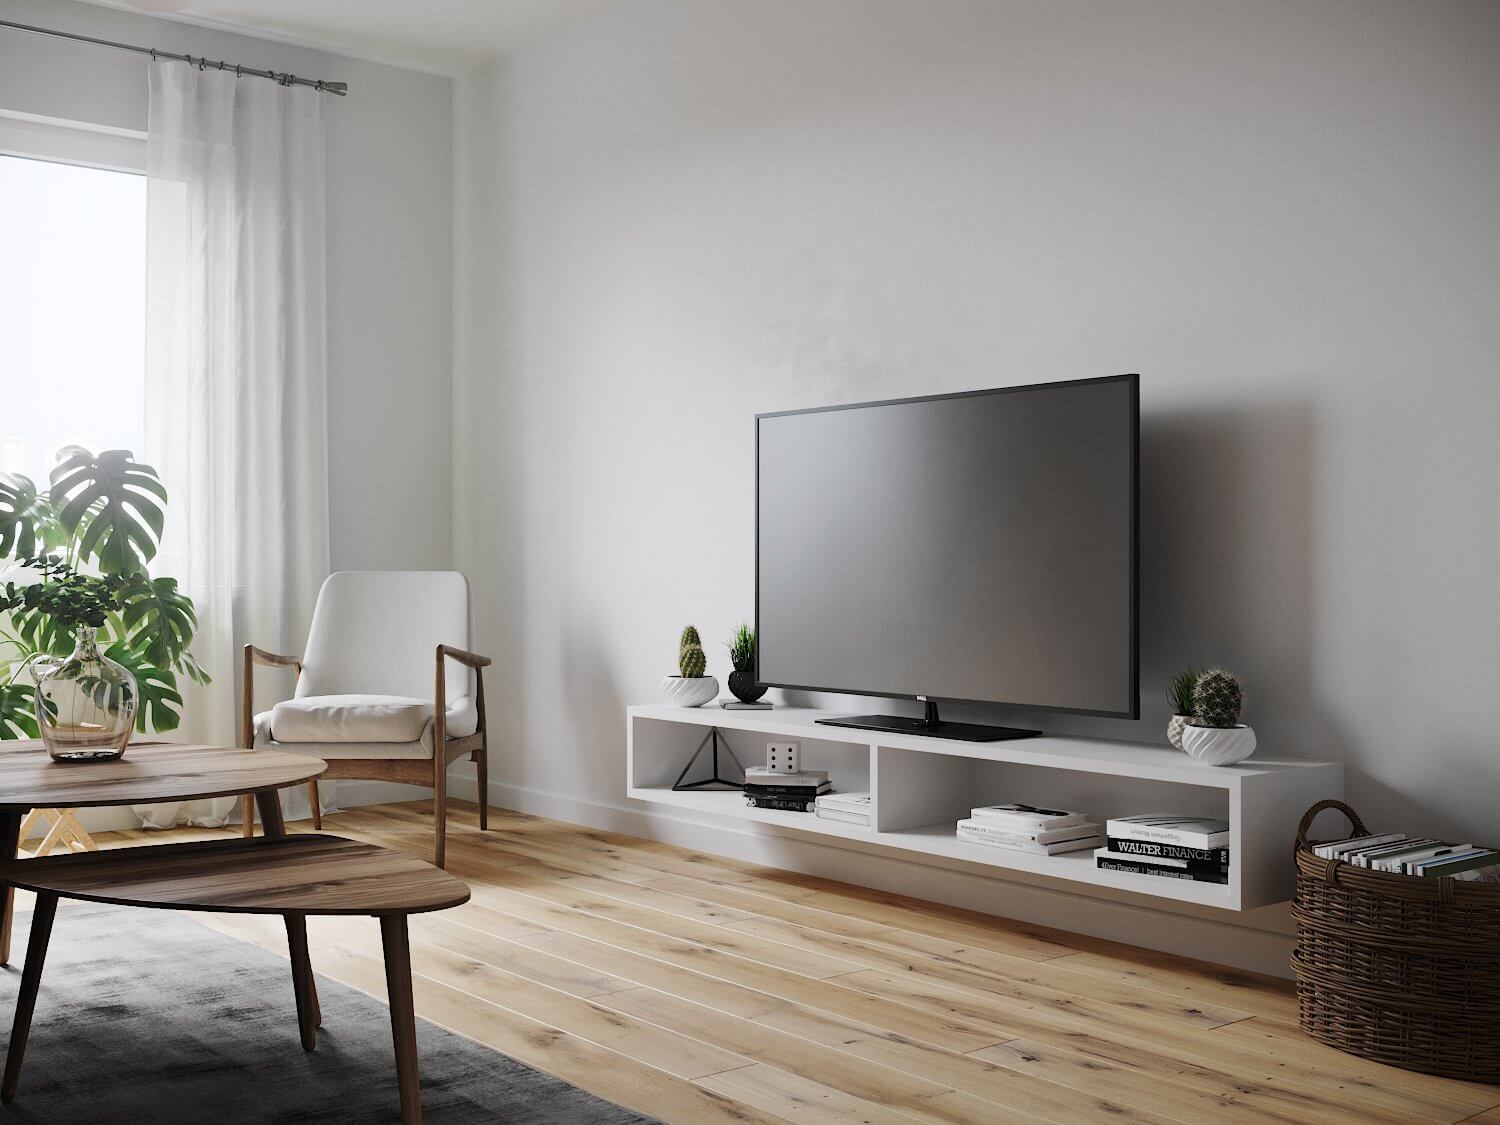 Stylish 72 metres sq. apartment living room tv wall lounge chair - cgi visualization